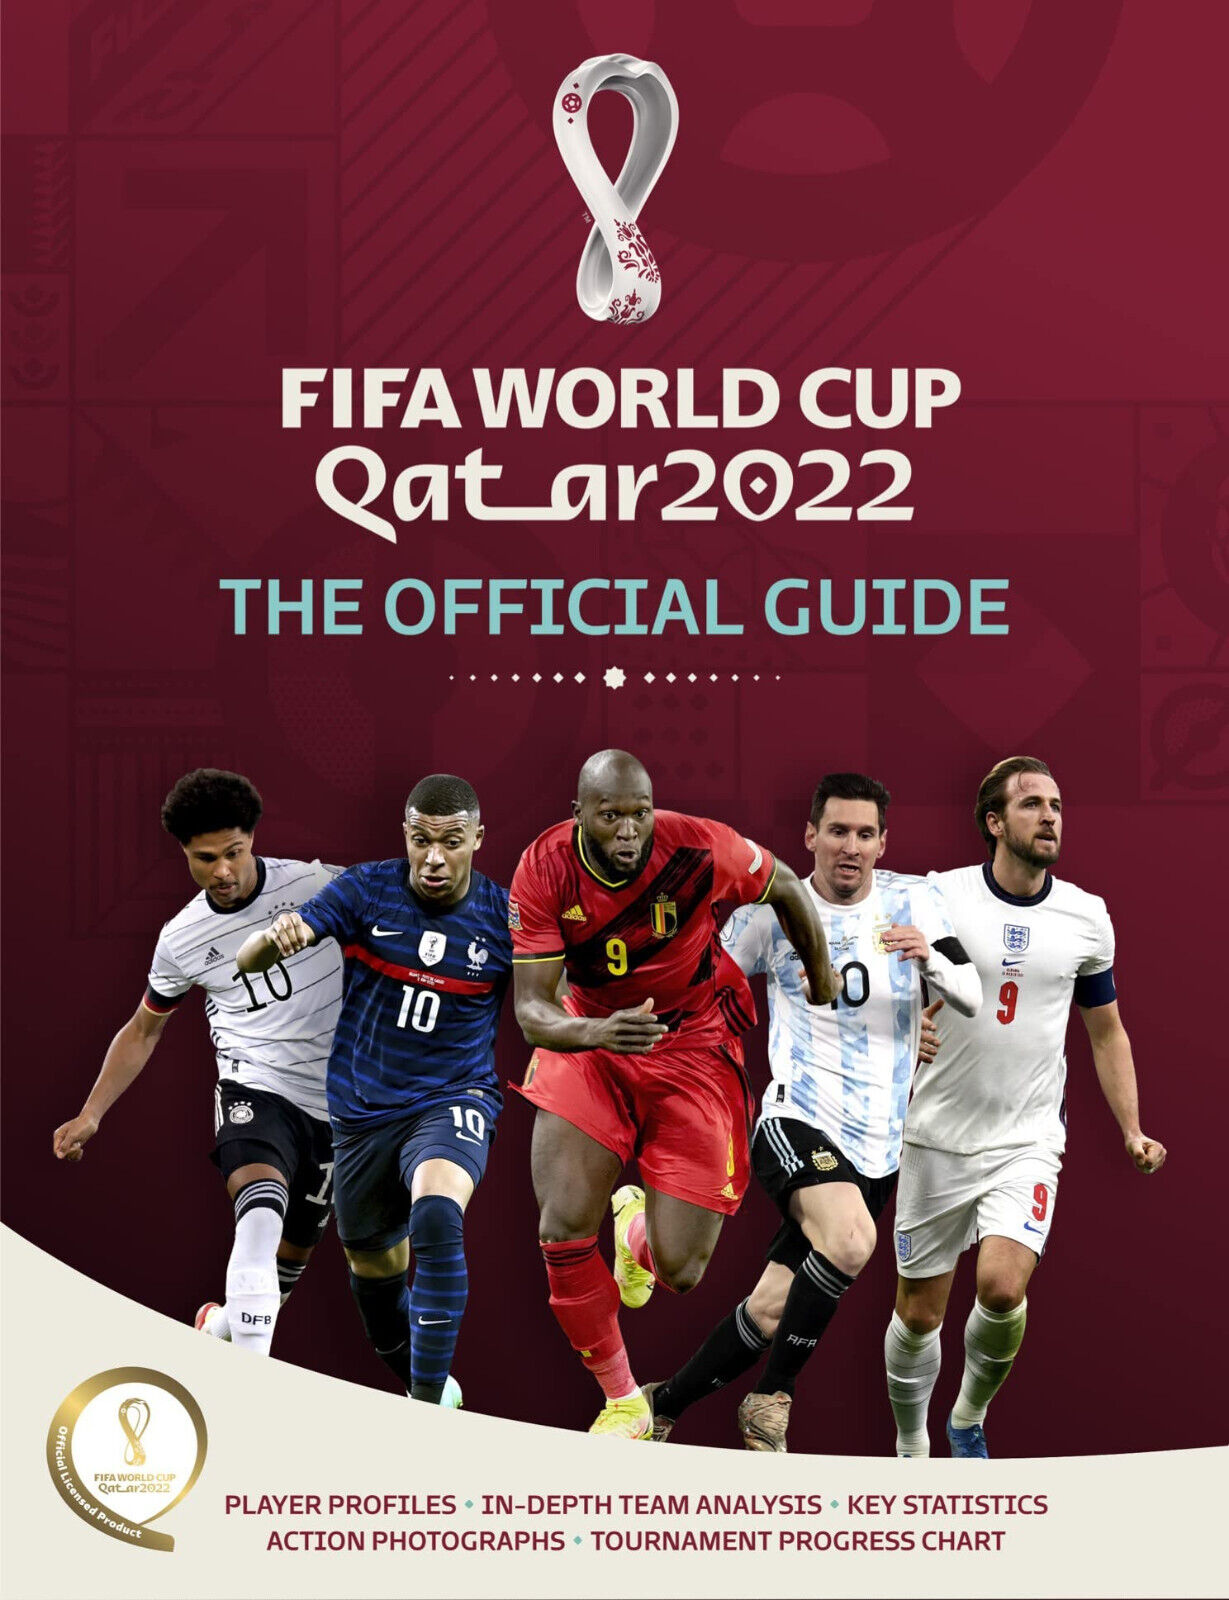 Fifa World Cup Qatar 2022: The Official Guide - Keir Radnedge - 2022